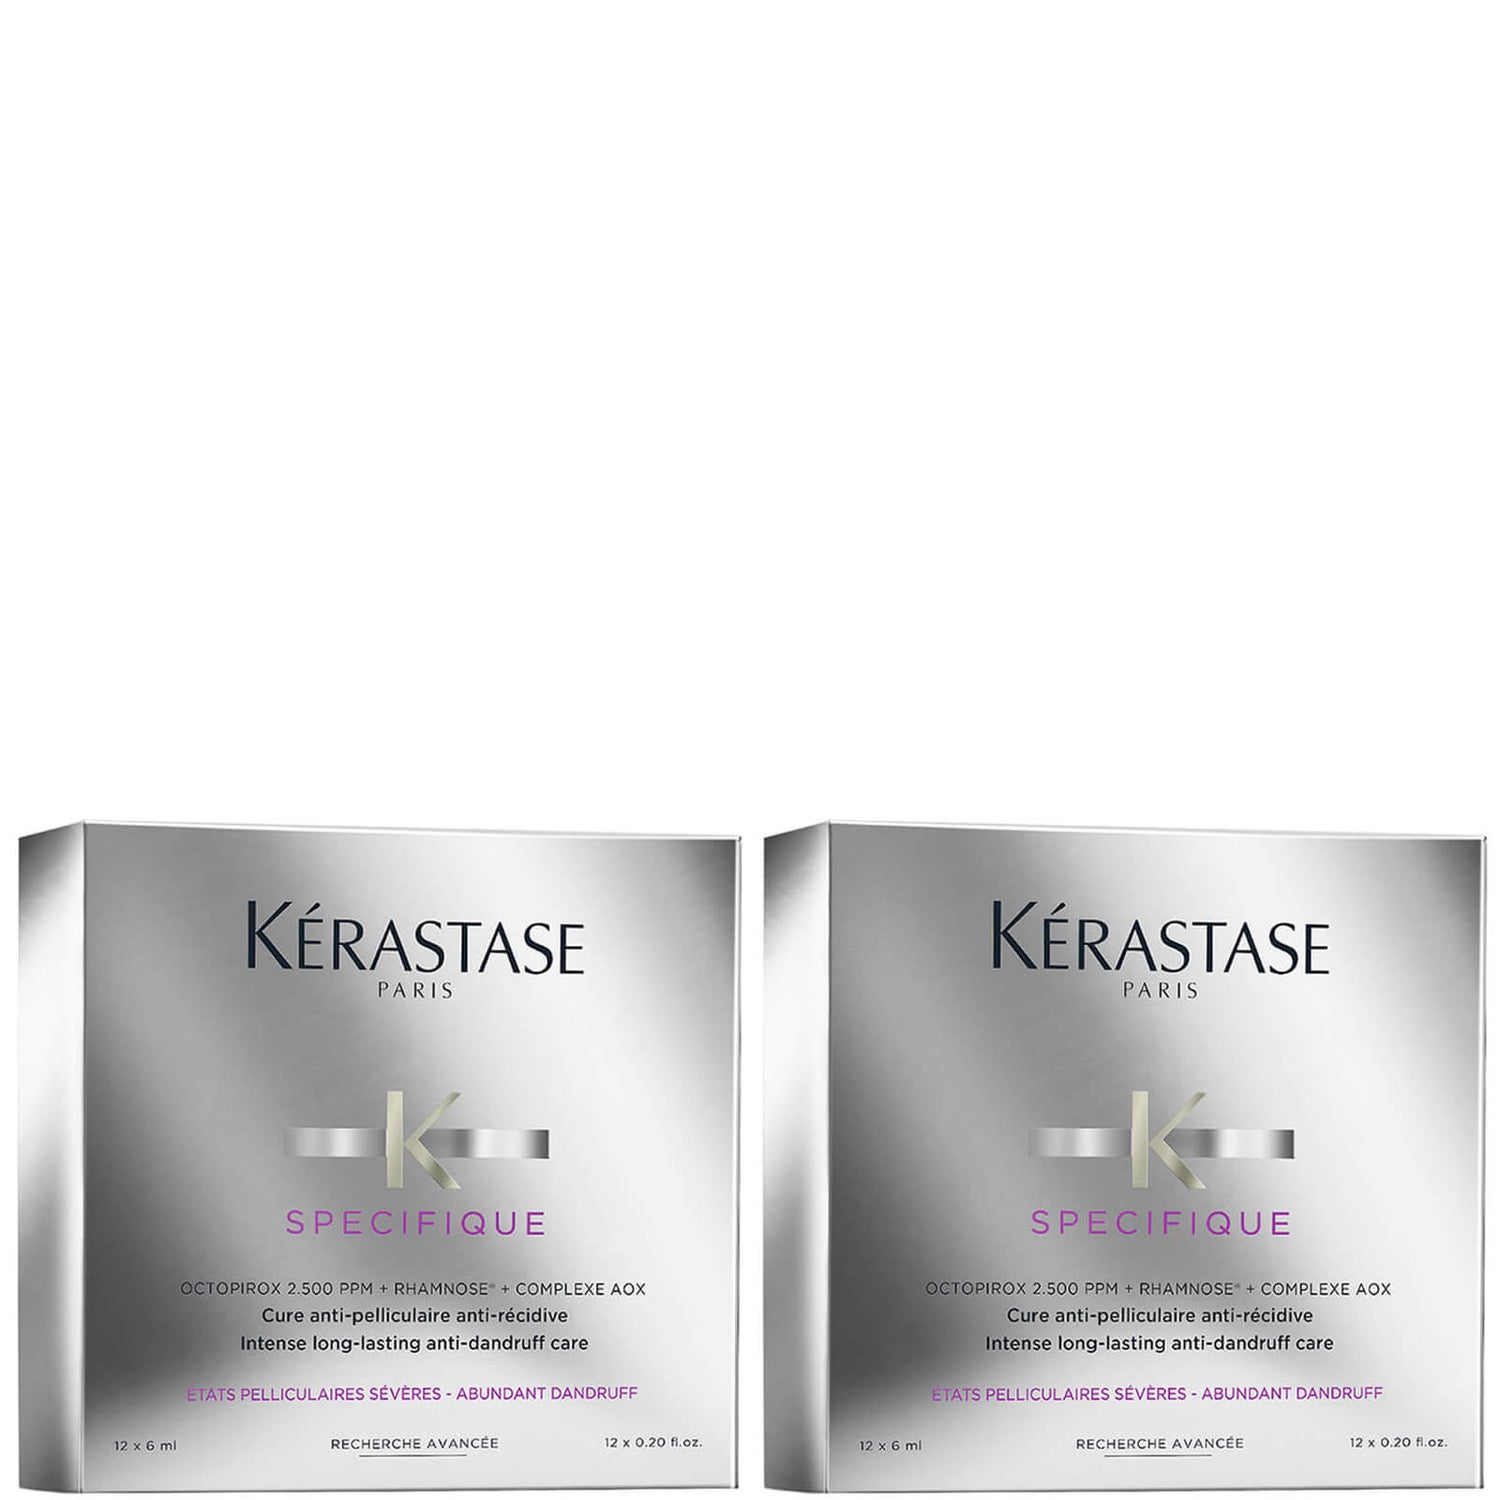 Kérastase Specifique Cure Anti-Pelliculaire Anti-Recidive Treatment 12 x 6ml Duo